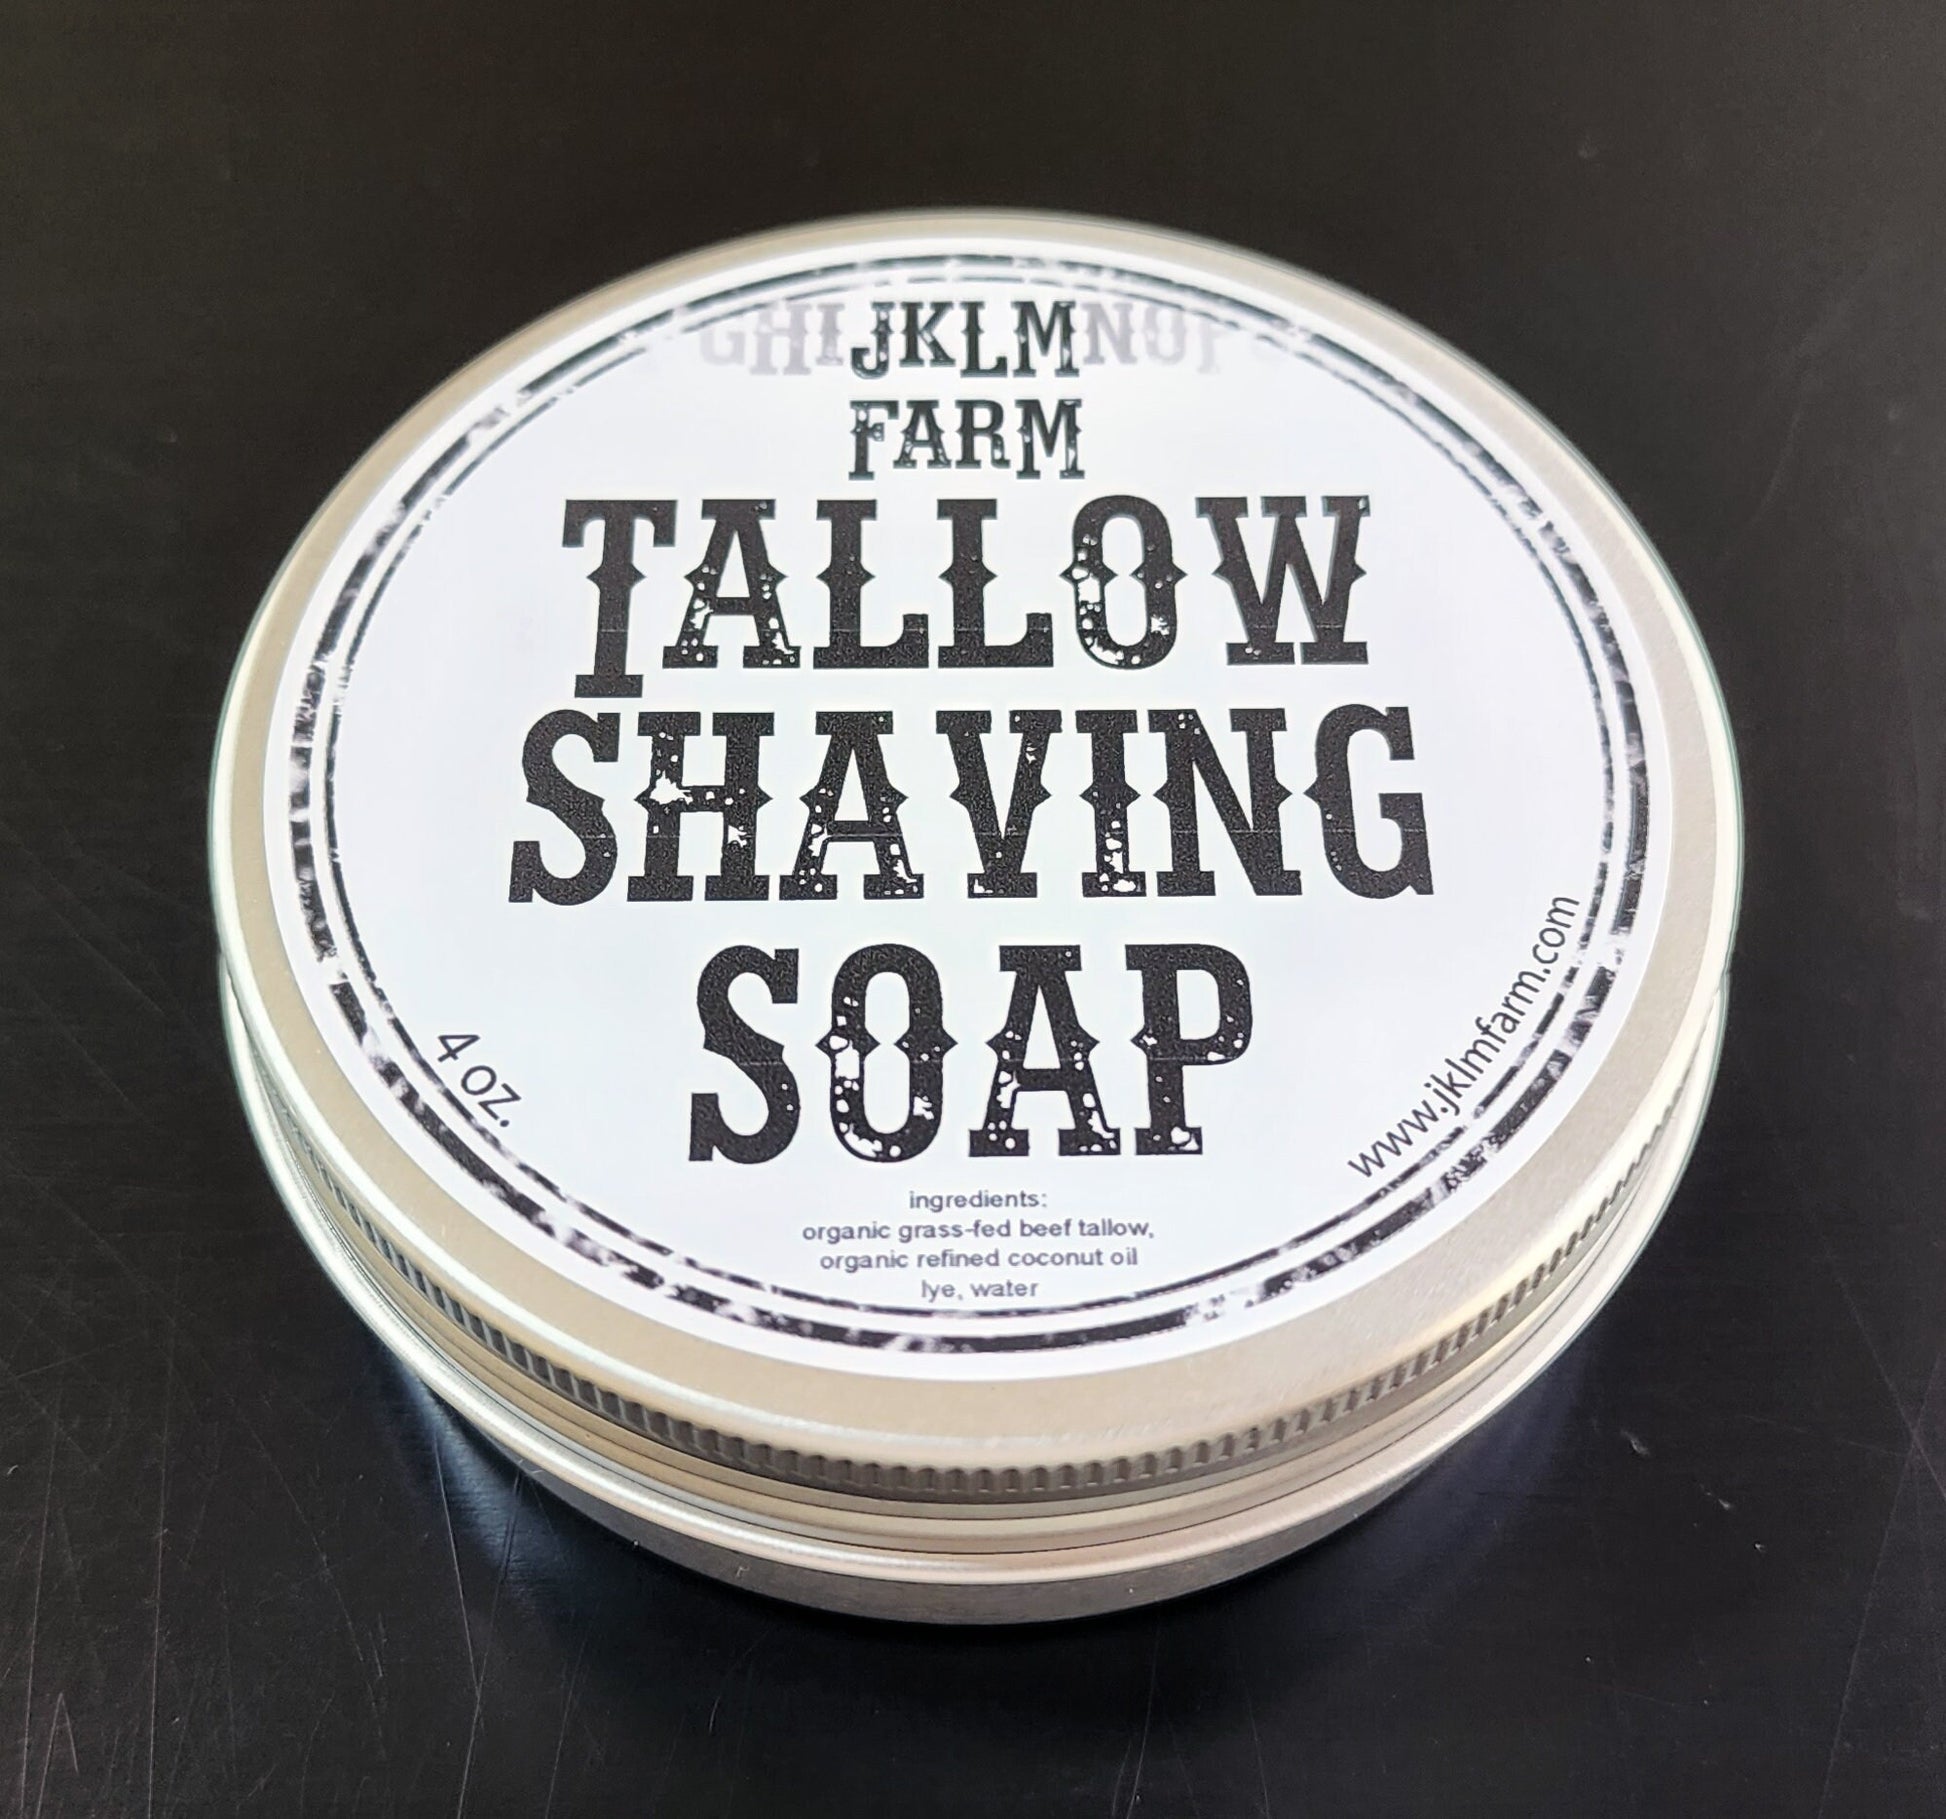 jklm farm natural organic grass-fed tallow shaving soap